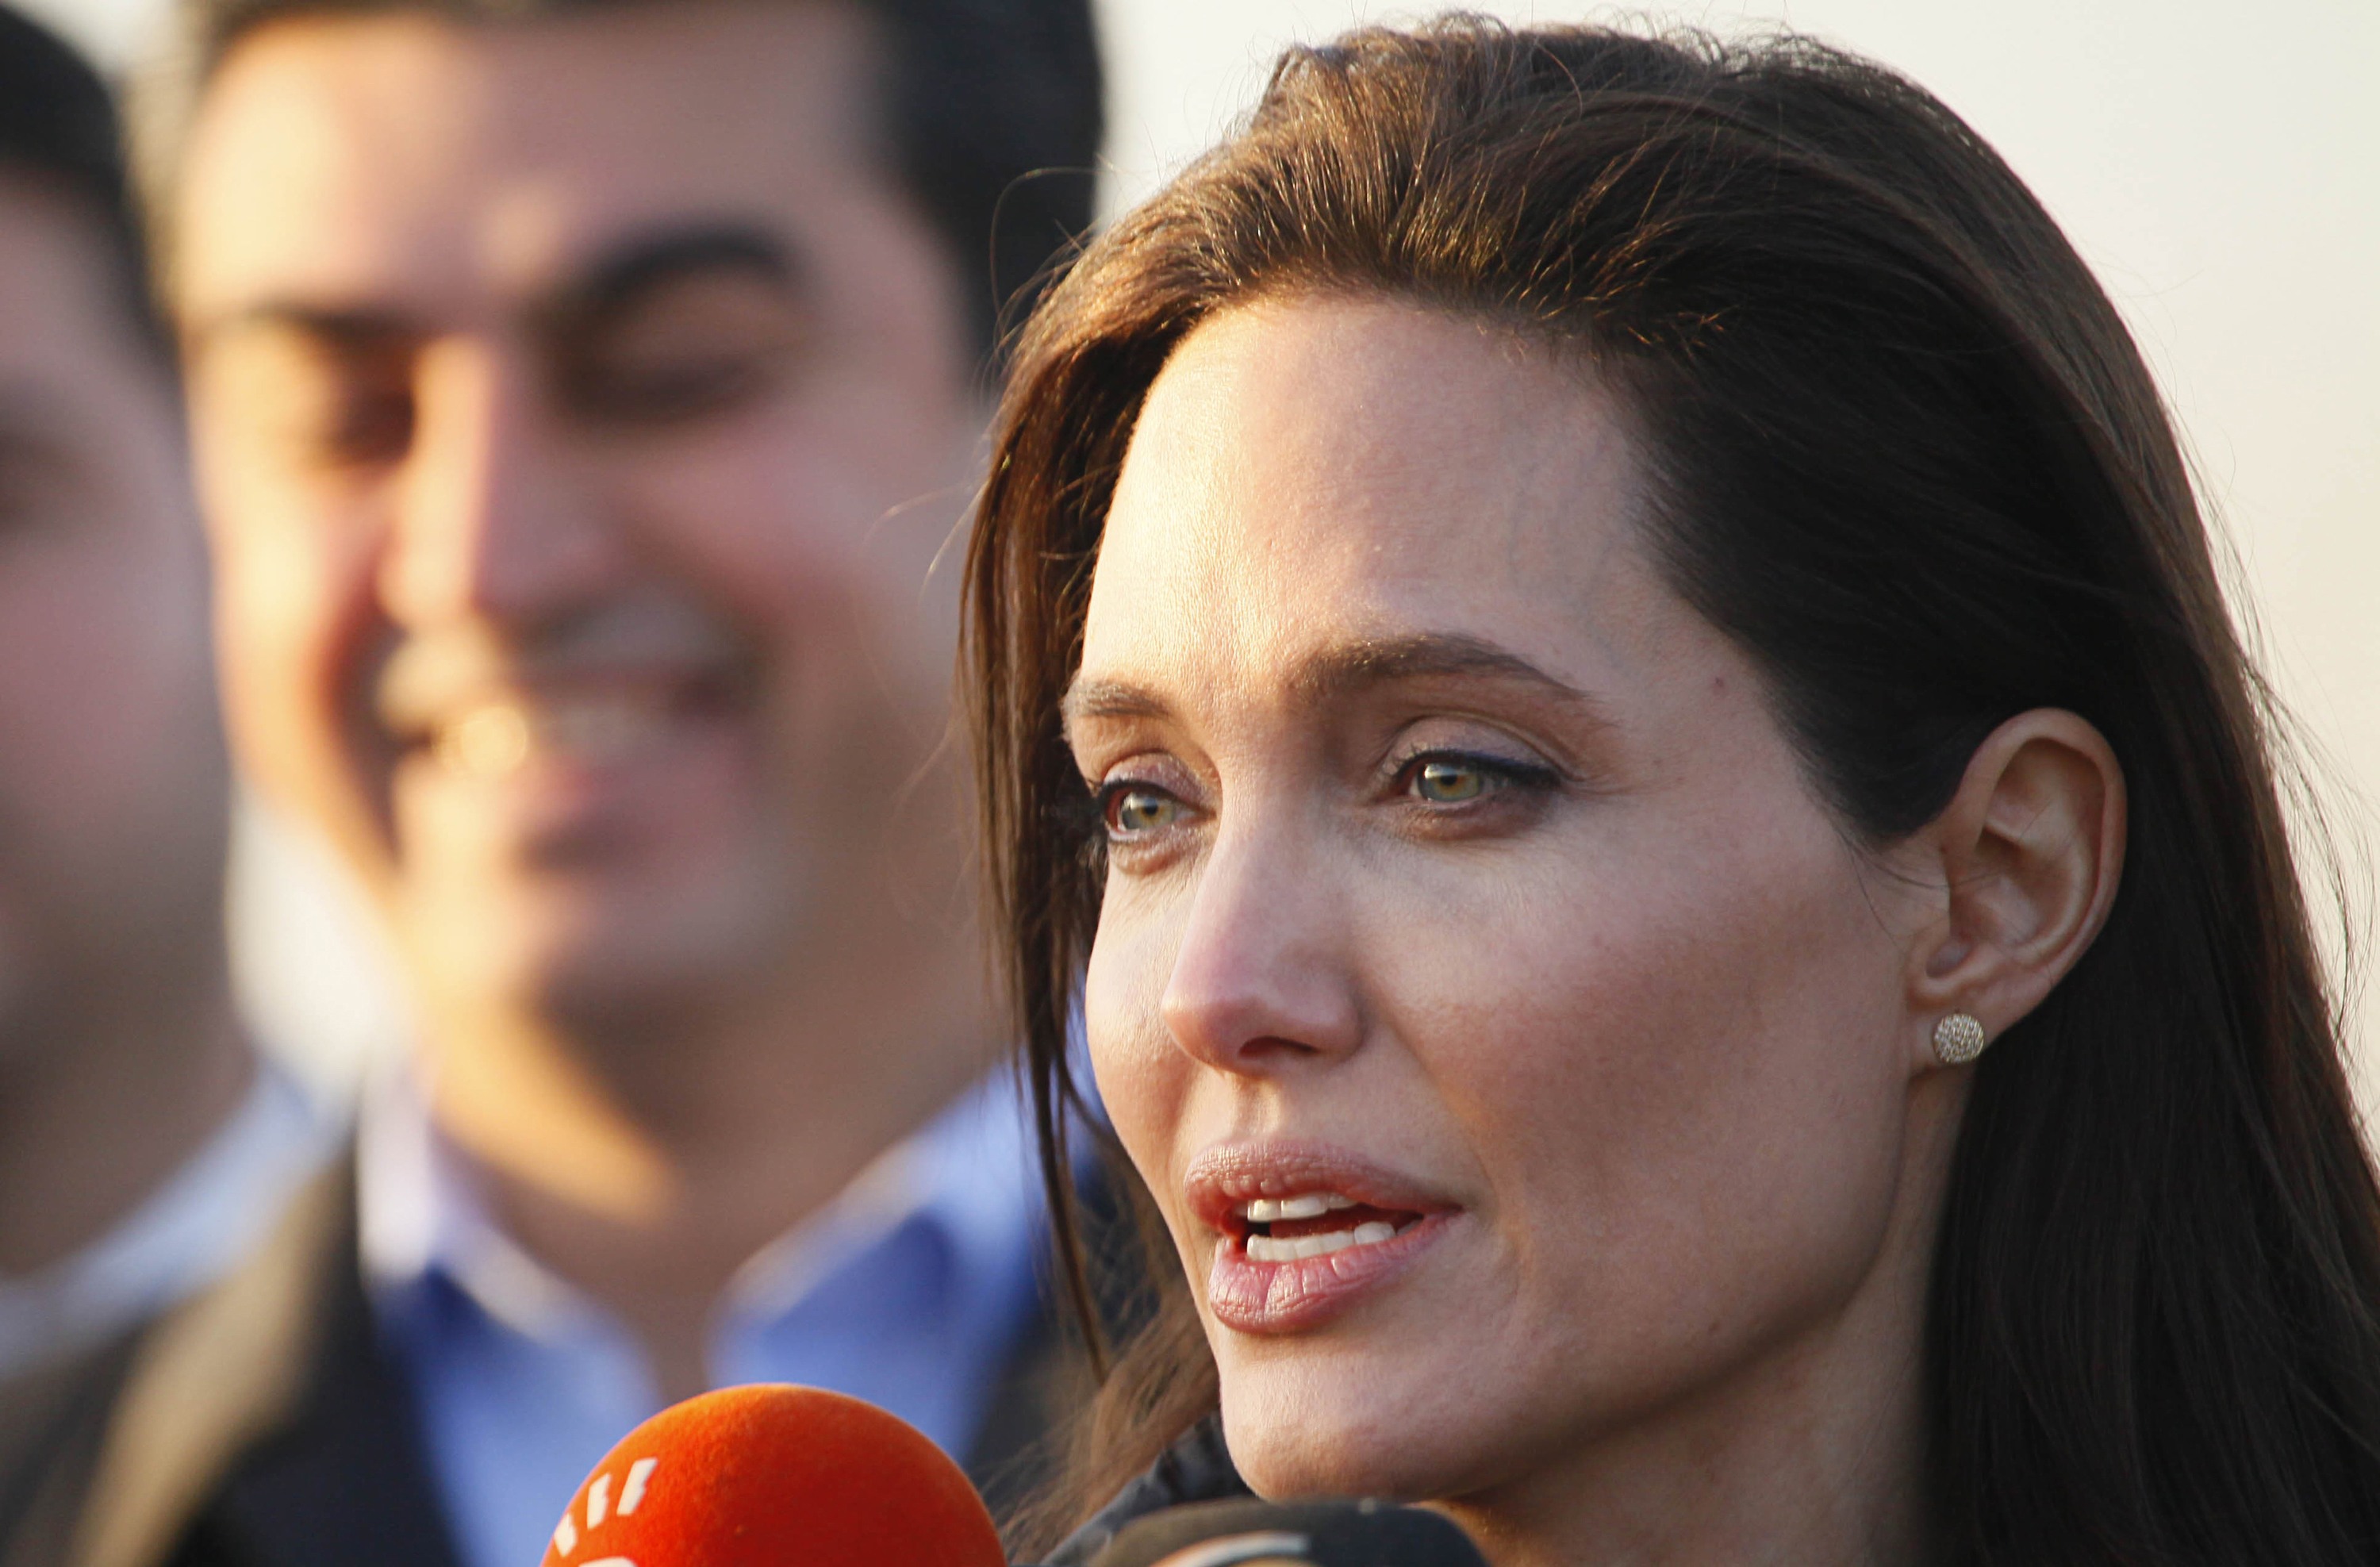 ¡Extrema delgadez! Angelina Jolie solo pesa 37 kilos  (FOTO)